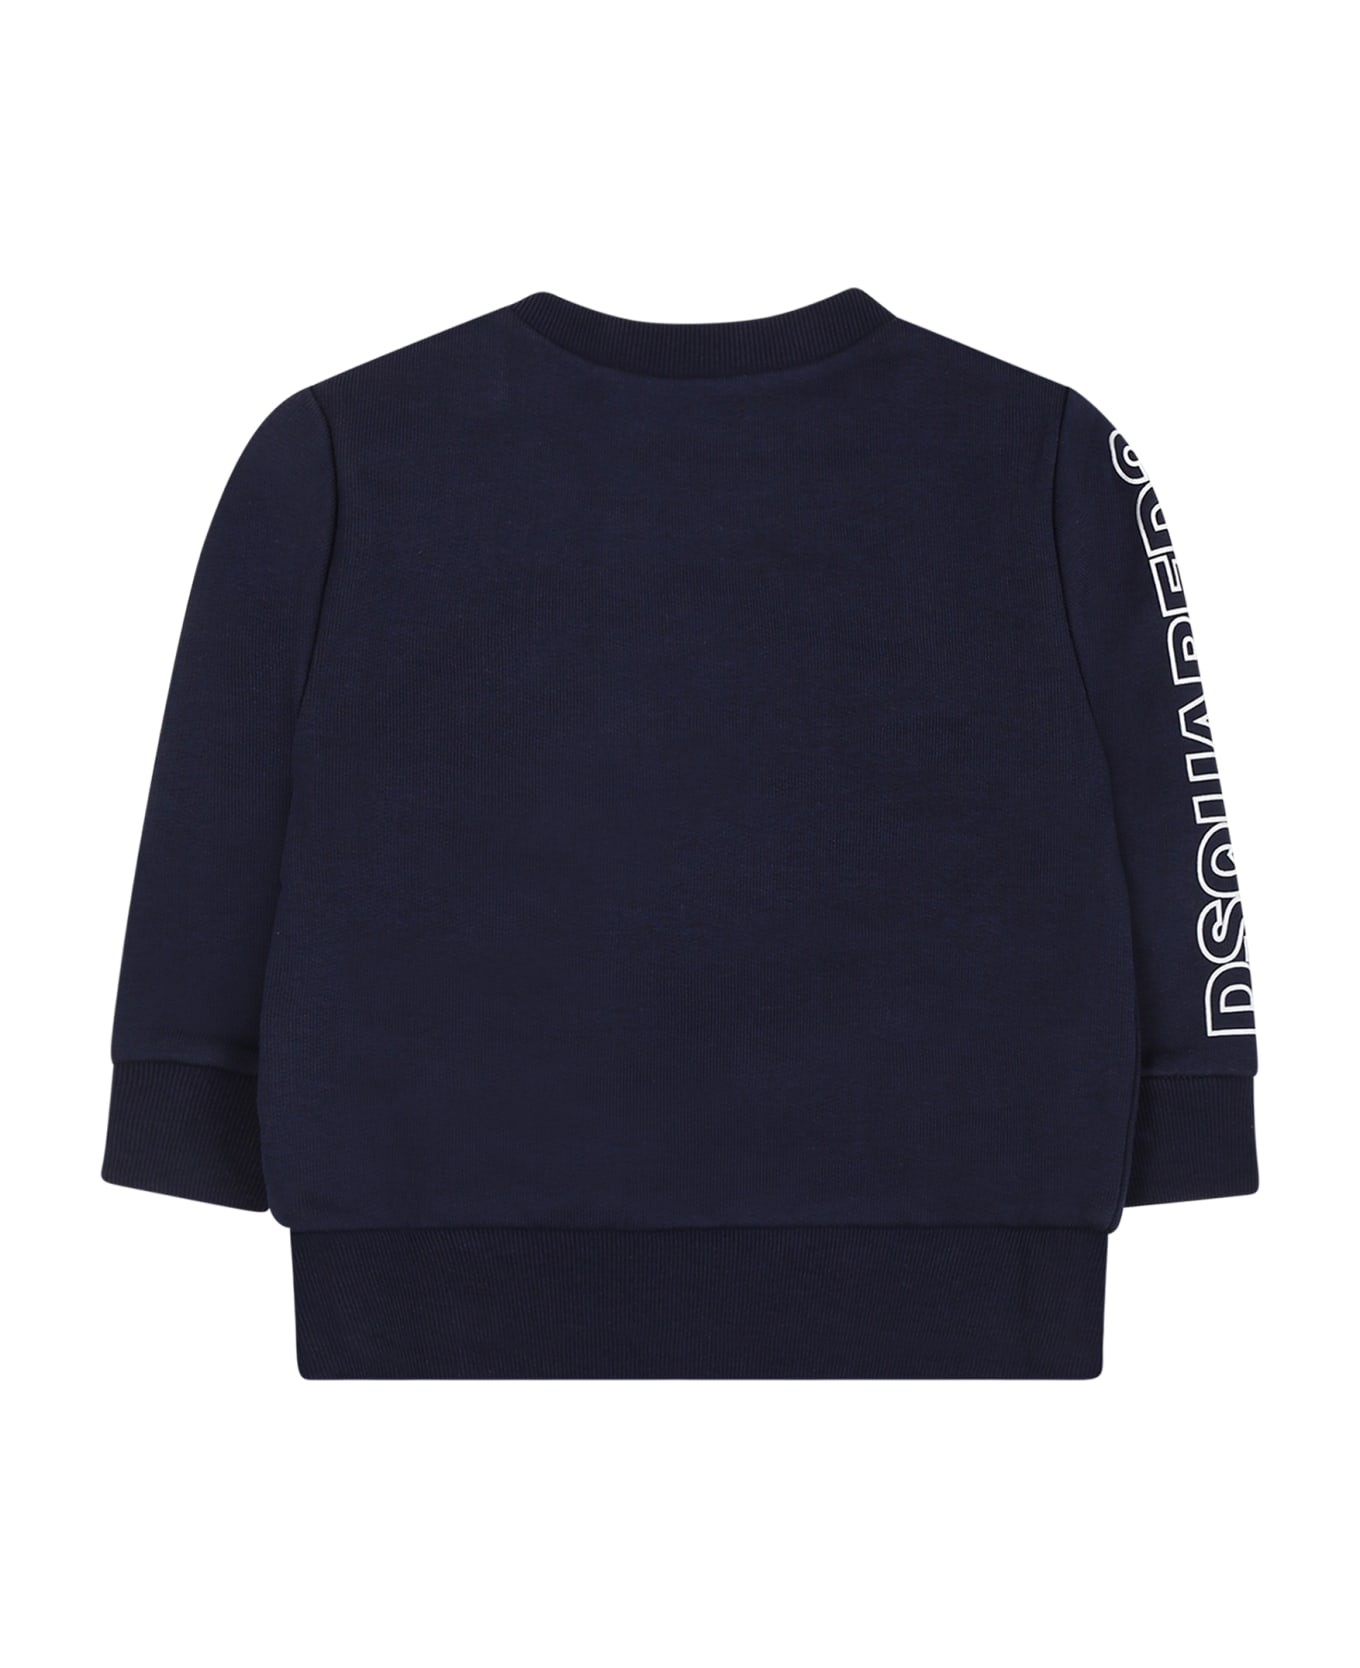 Dsquared2 Blue Sweatshirt For Baby Boy With Logo - Blue ニットウェア＆スウェットシャツ